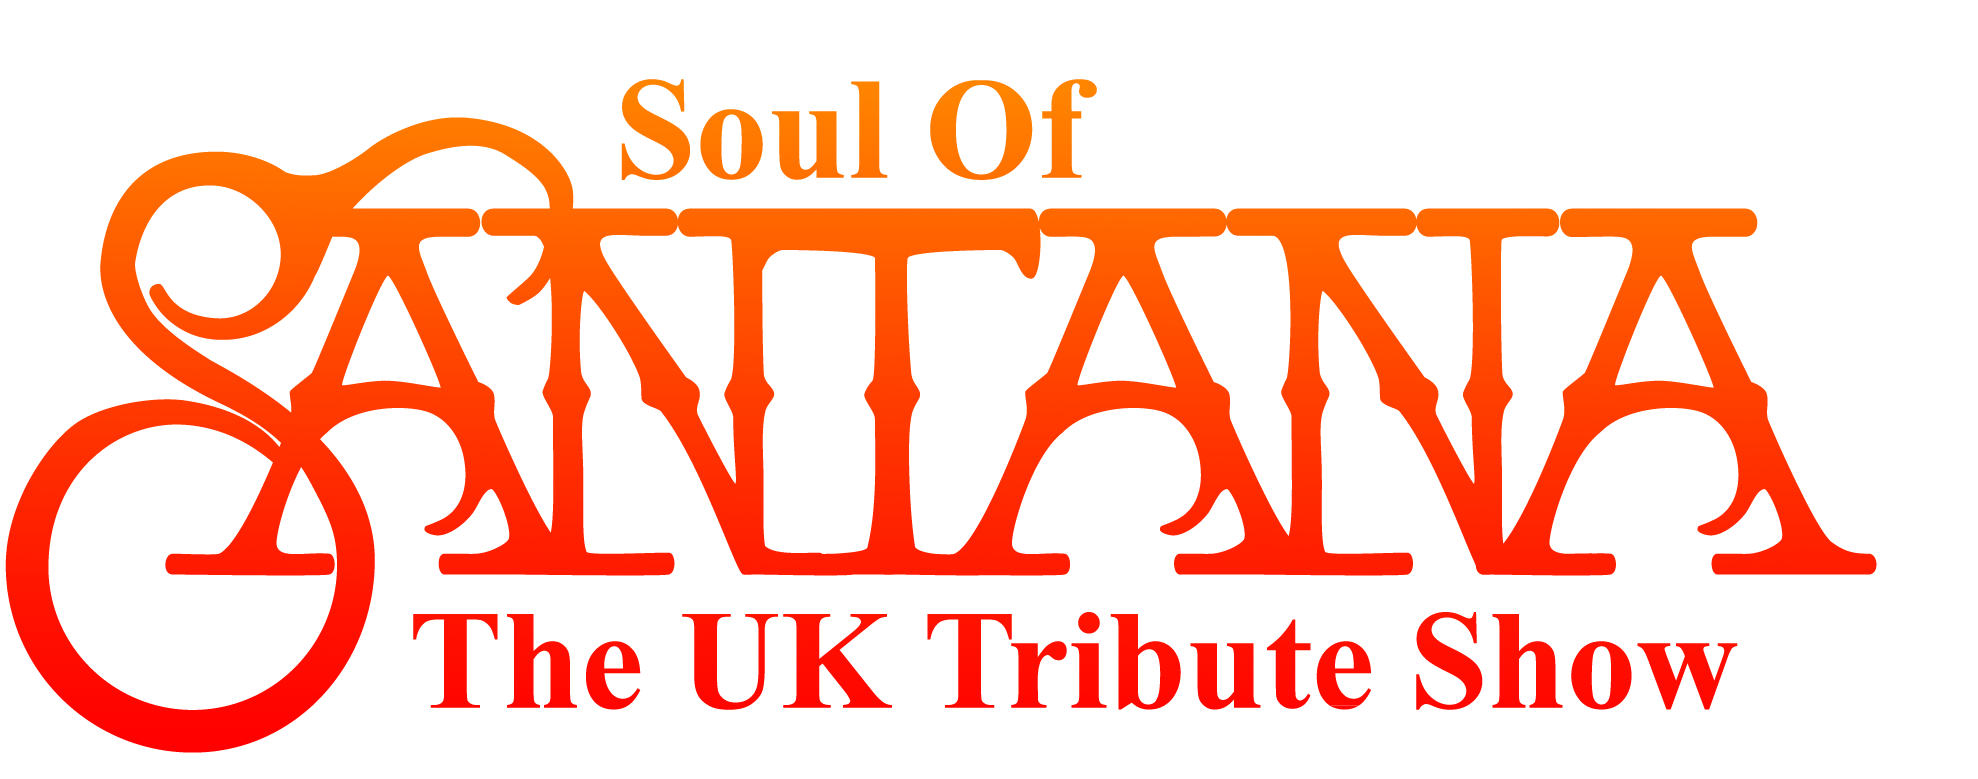 Santana Logo - Ramsgate TRIBUTE ACTS - soul of santana - TRIBUTE ACTS